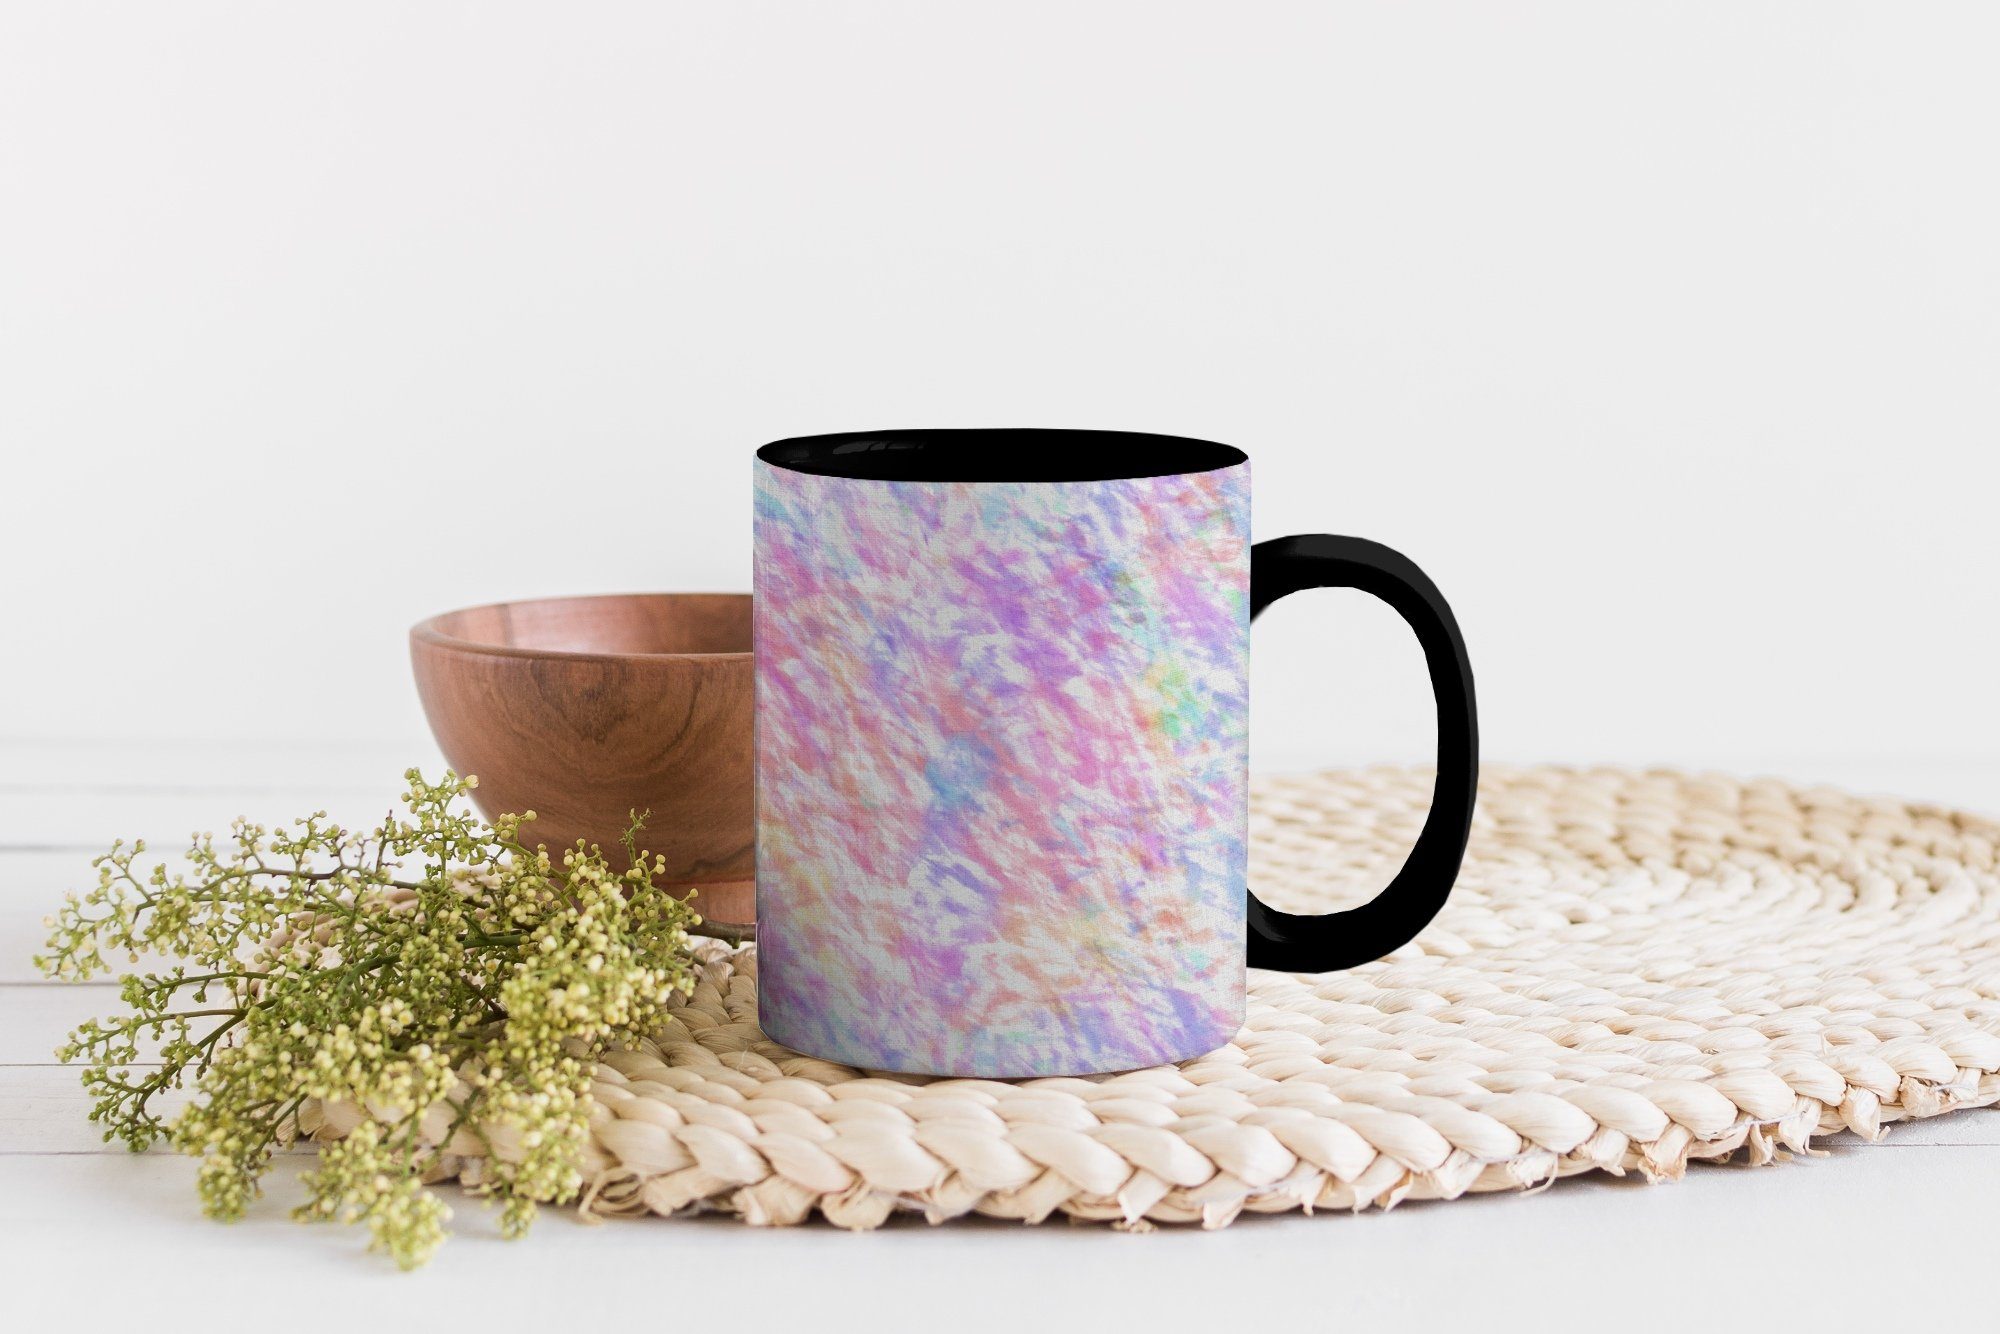 Zaubertasse, Geschenk Kaffeetassen, Teetasse, Farbwechsel, Muster - Krawattenfärbung, MuchoWow Tasse - Regenbogen Farbe Keramik, -